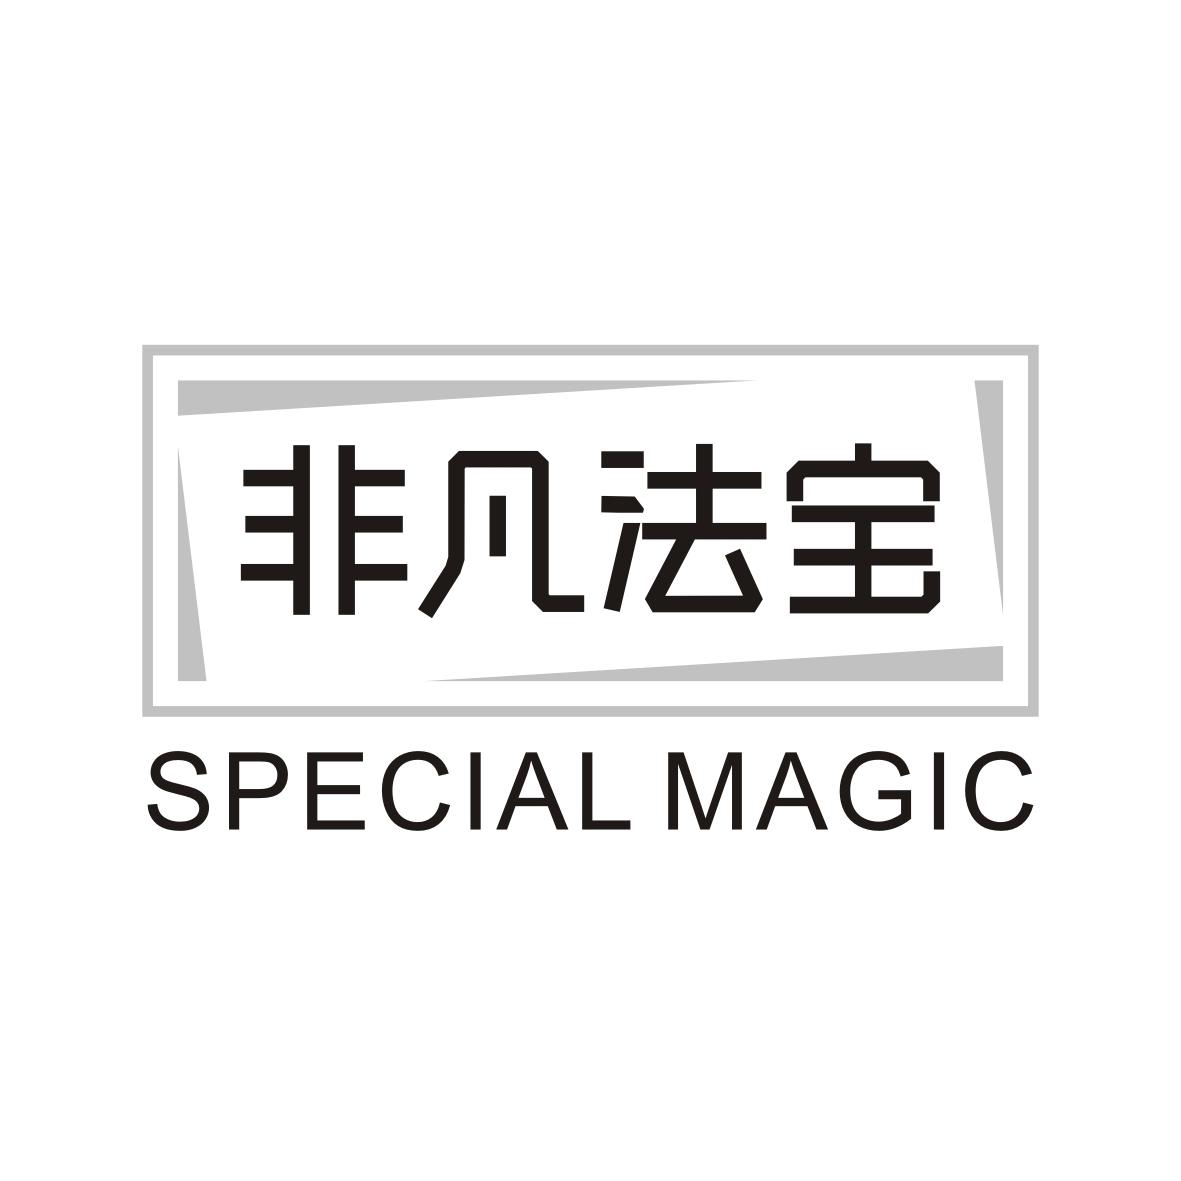 11类-电器灯具非凡法宝 SPECIAL MAGIC商标转让